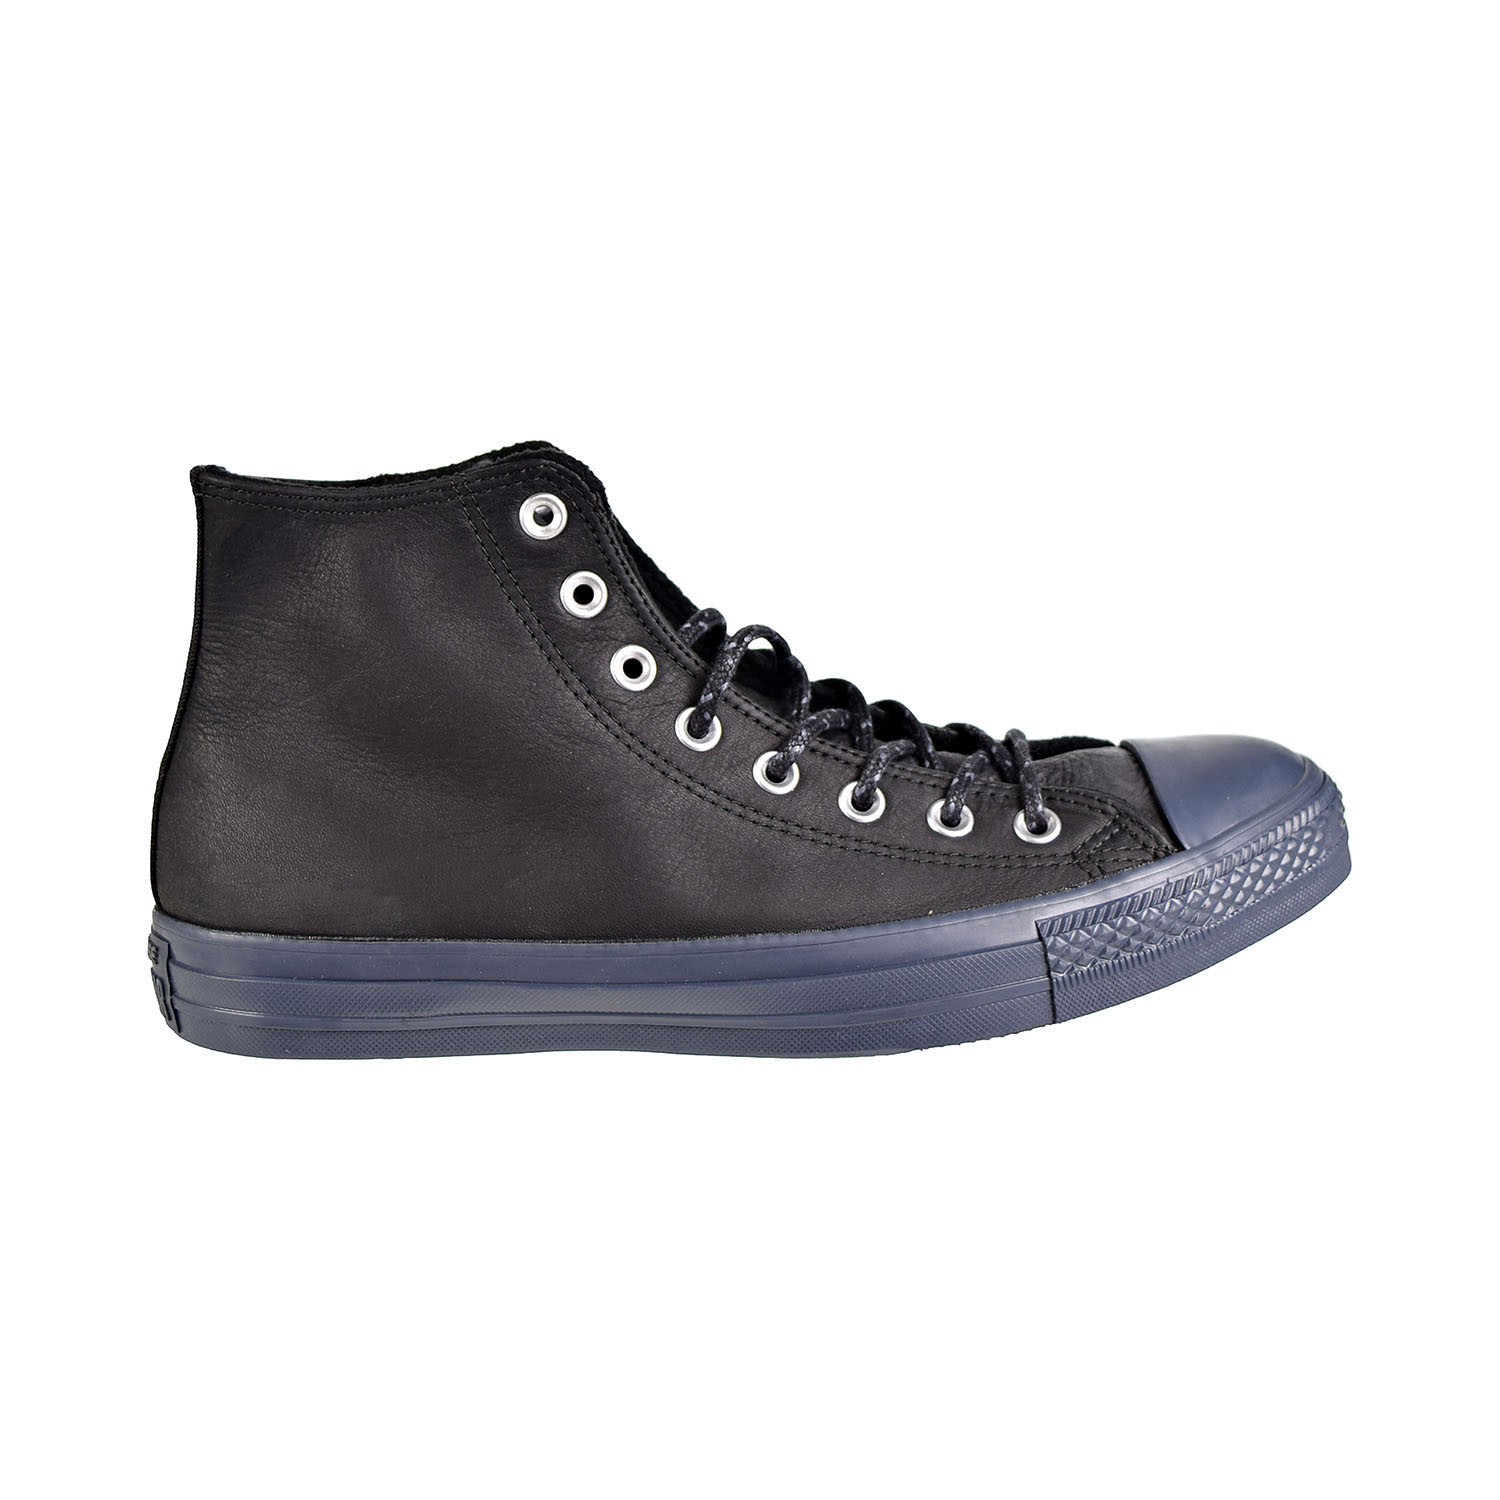 Converse Chuck Taylor All Star Hi Thermal Men's Shoes Black-Sharkskin 157514c - image 1 of 6